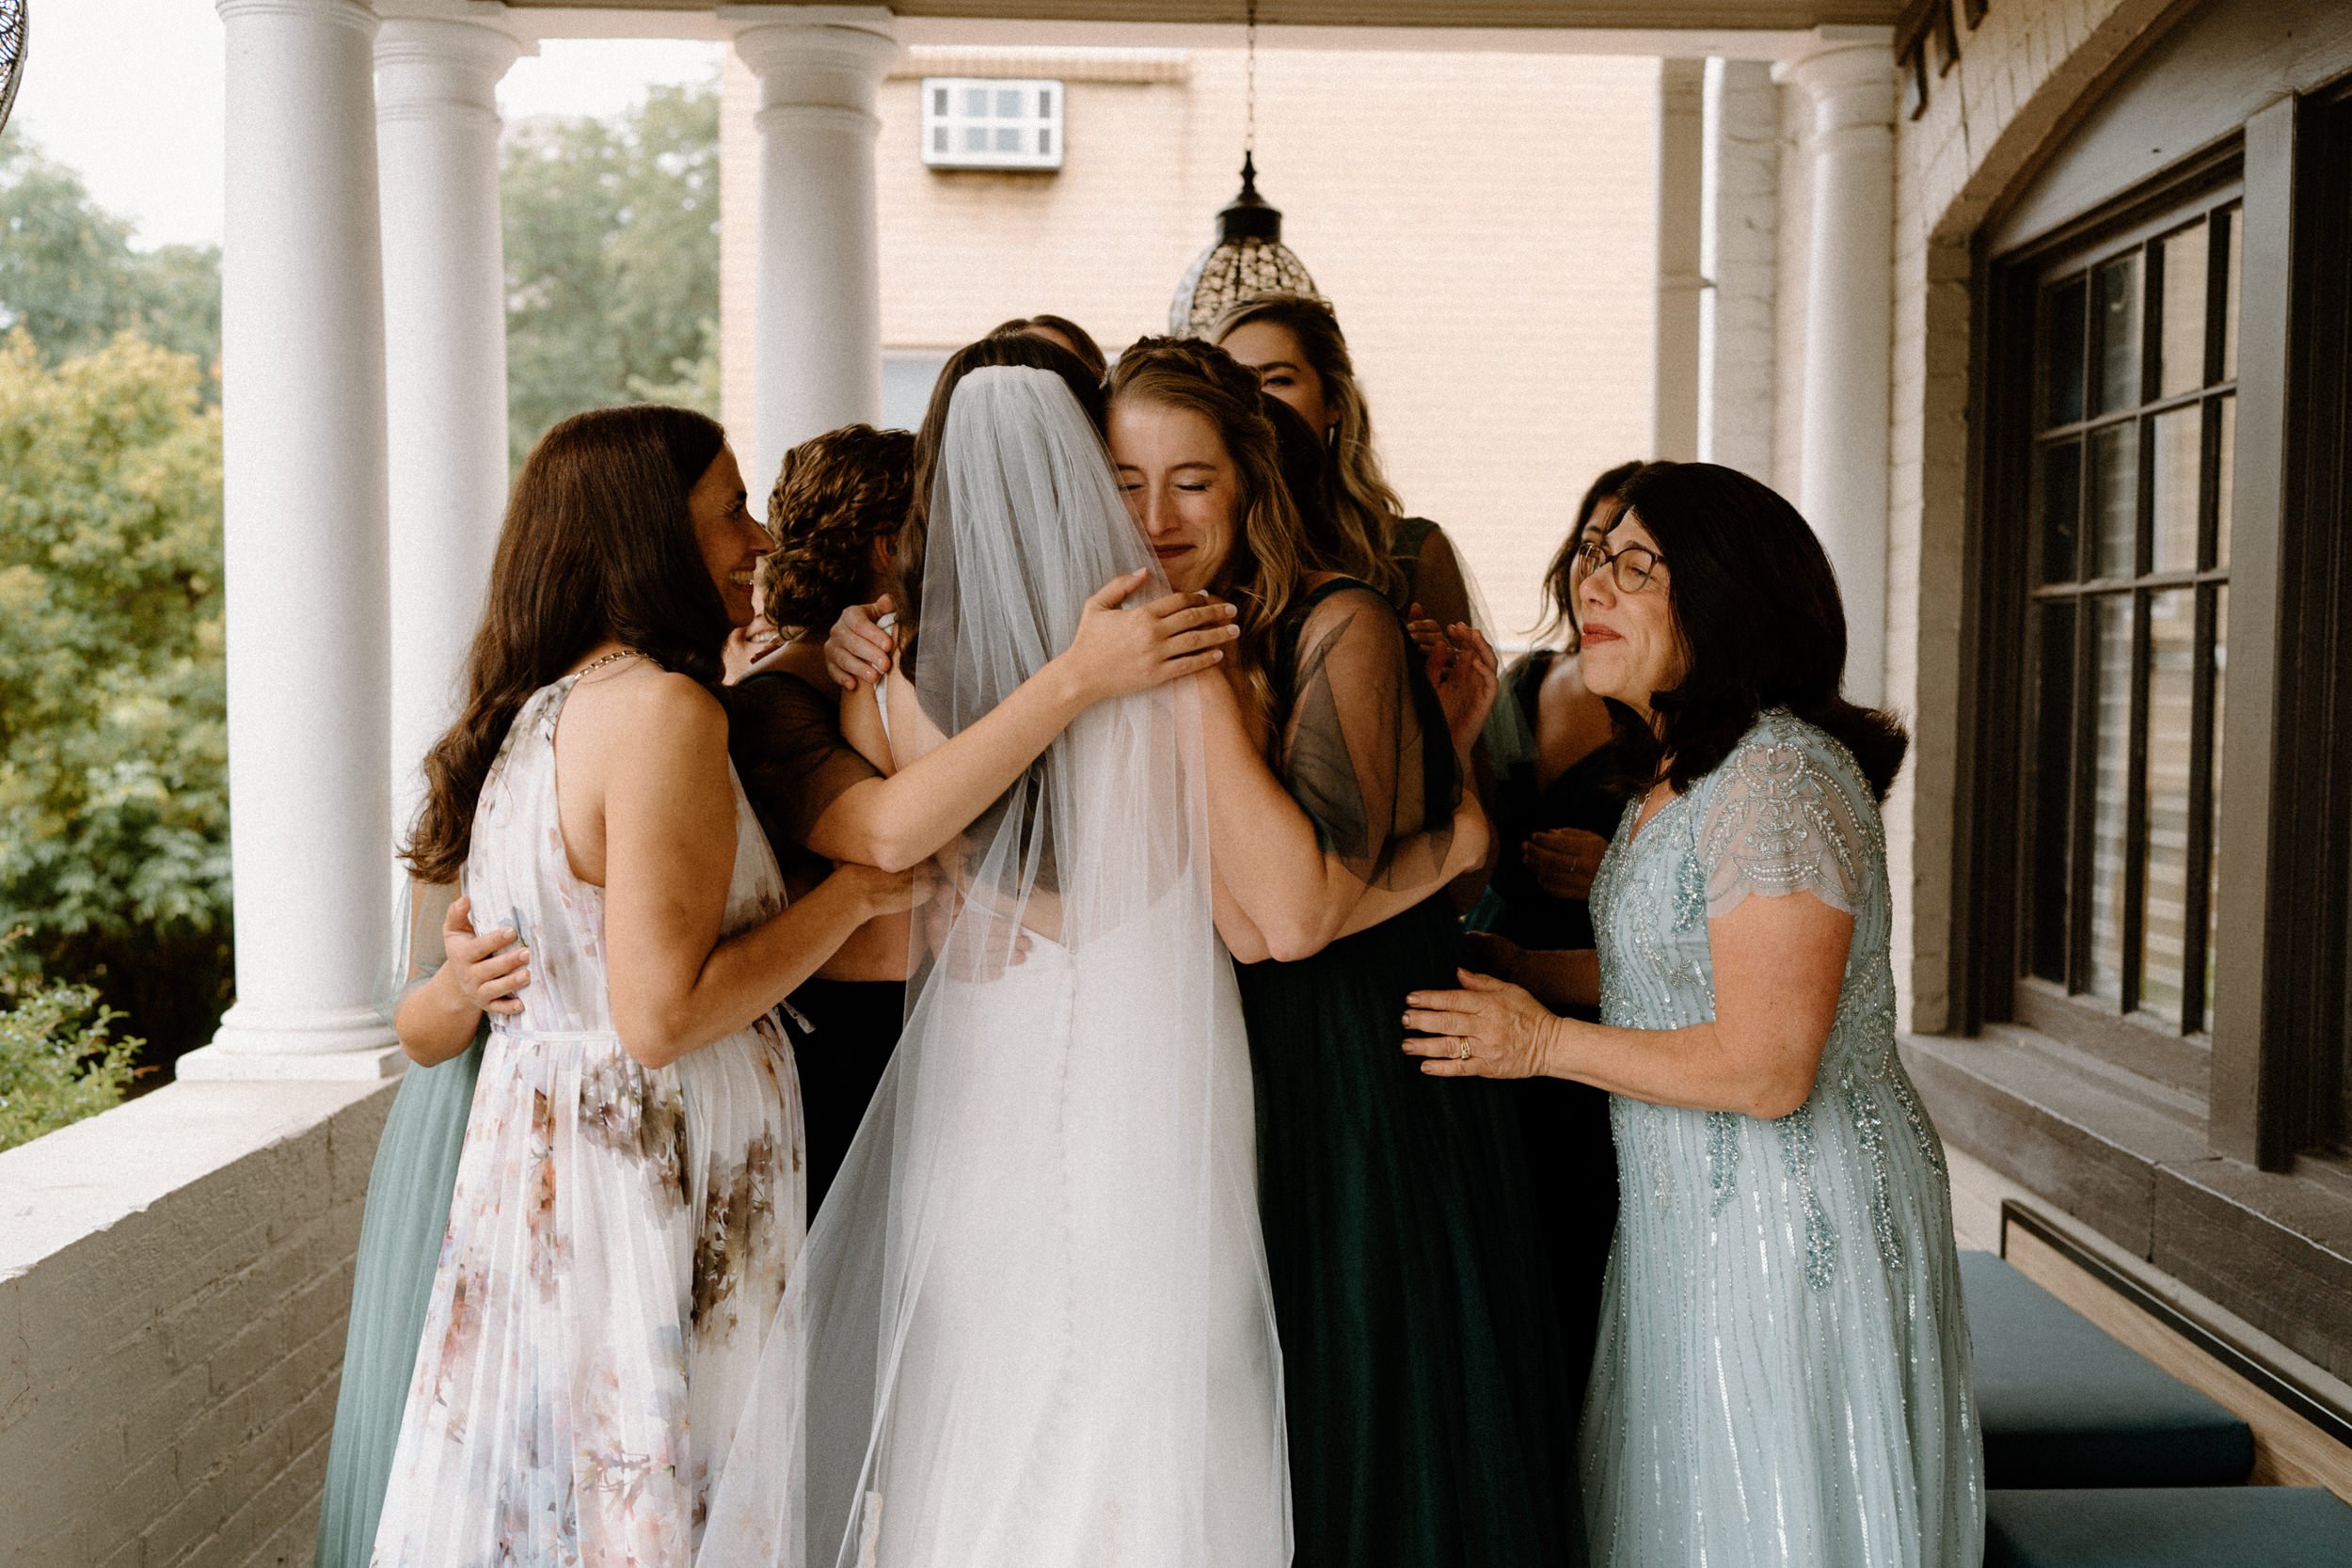 The bridesmaids embrace the bride